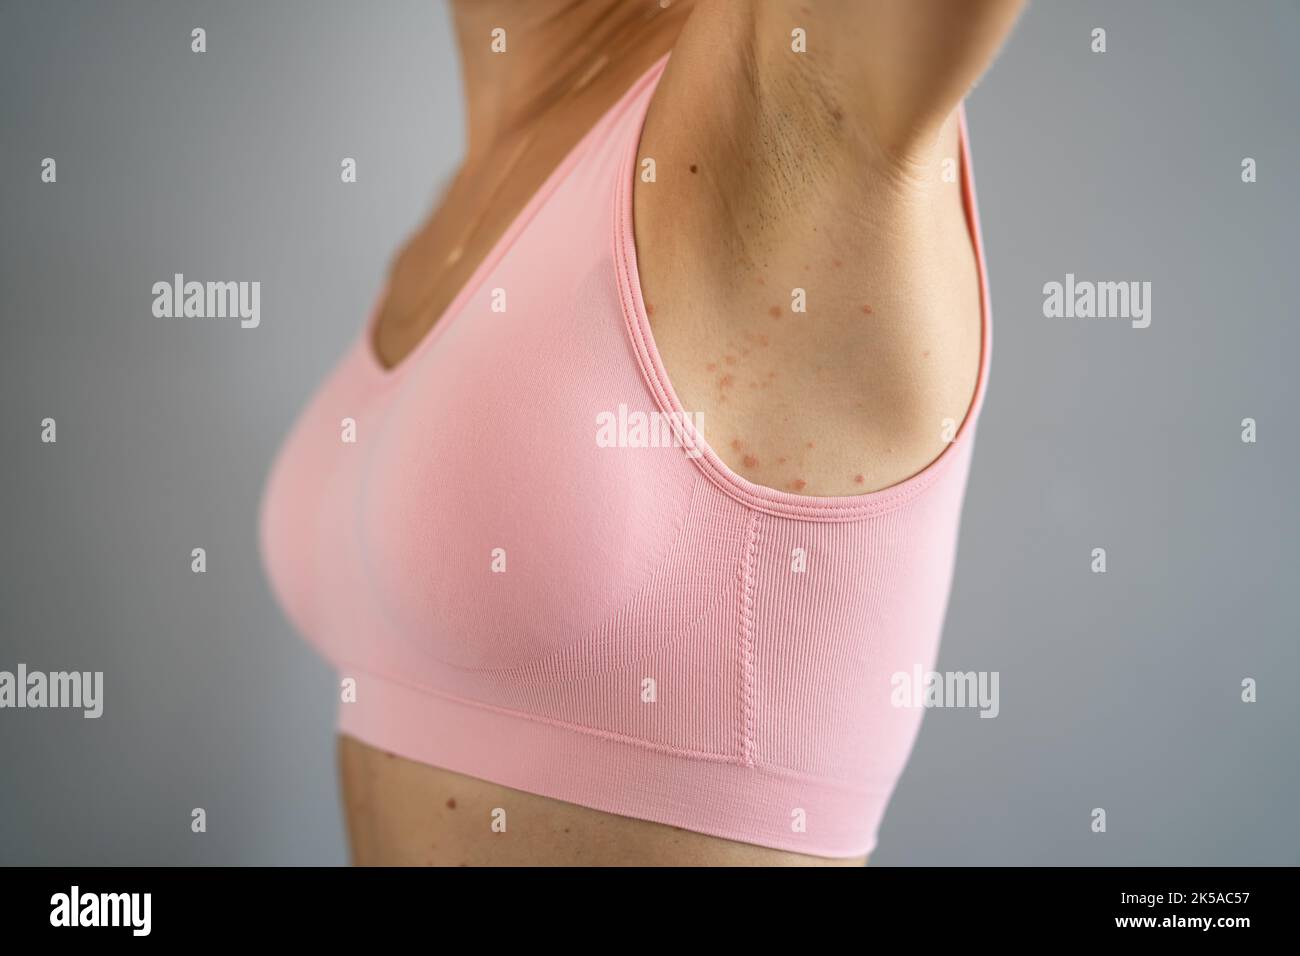 https://c8.alamy.com/comp/2K5AC57/woman-body-skin-rash-with-red-allergy-eruption-2K5AC57.jpg